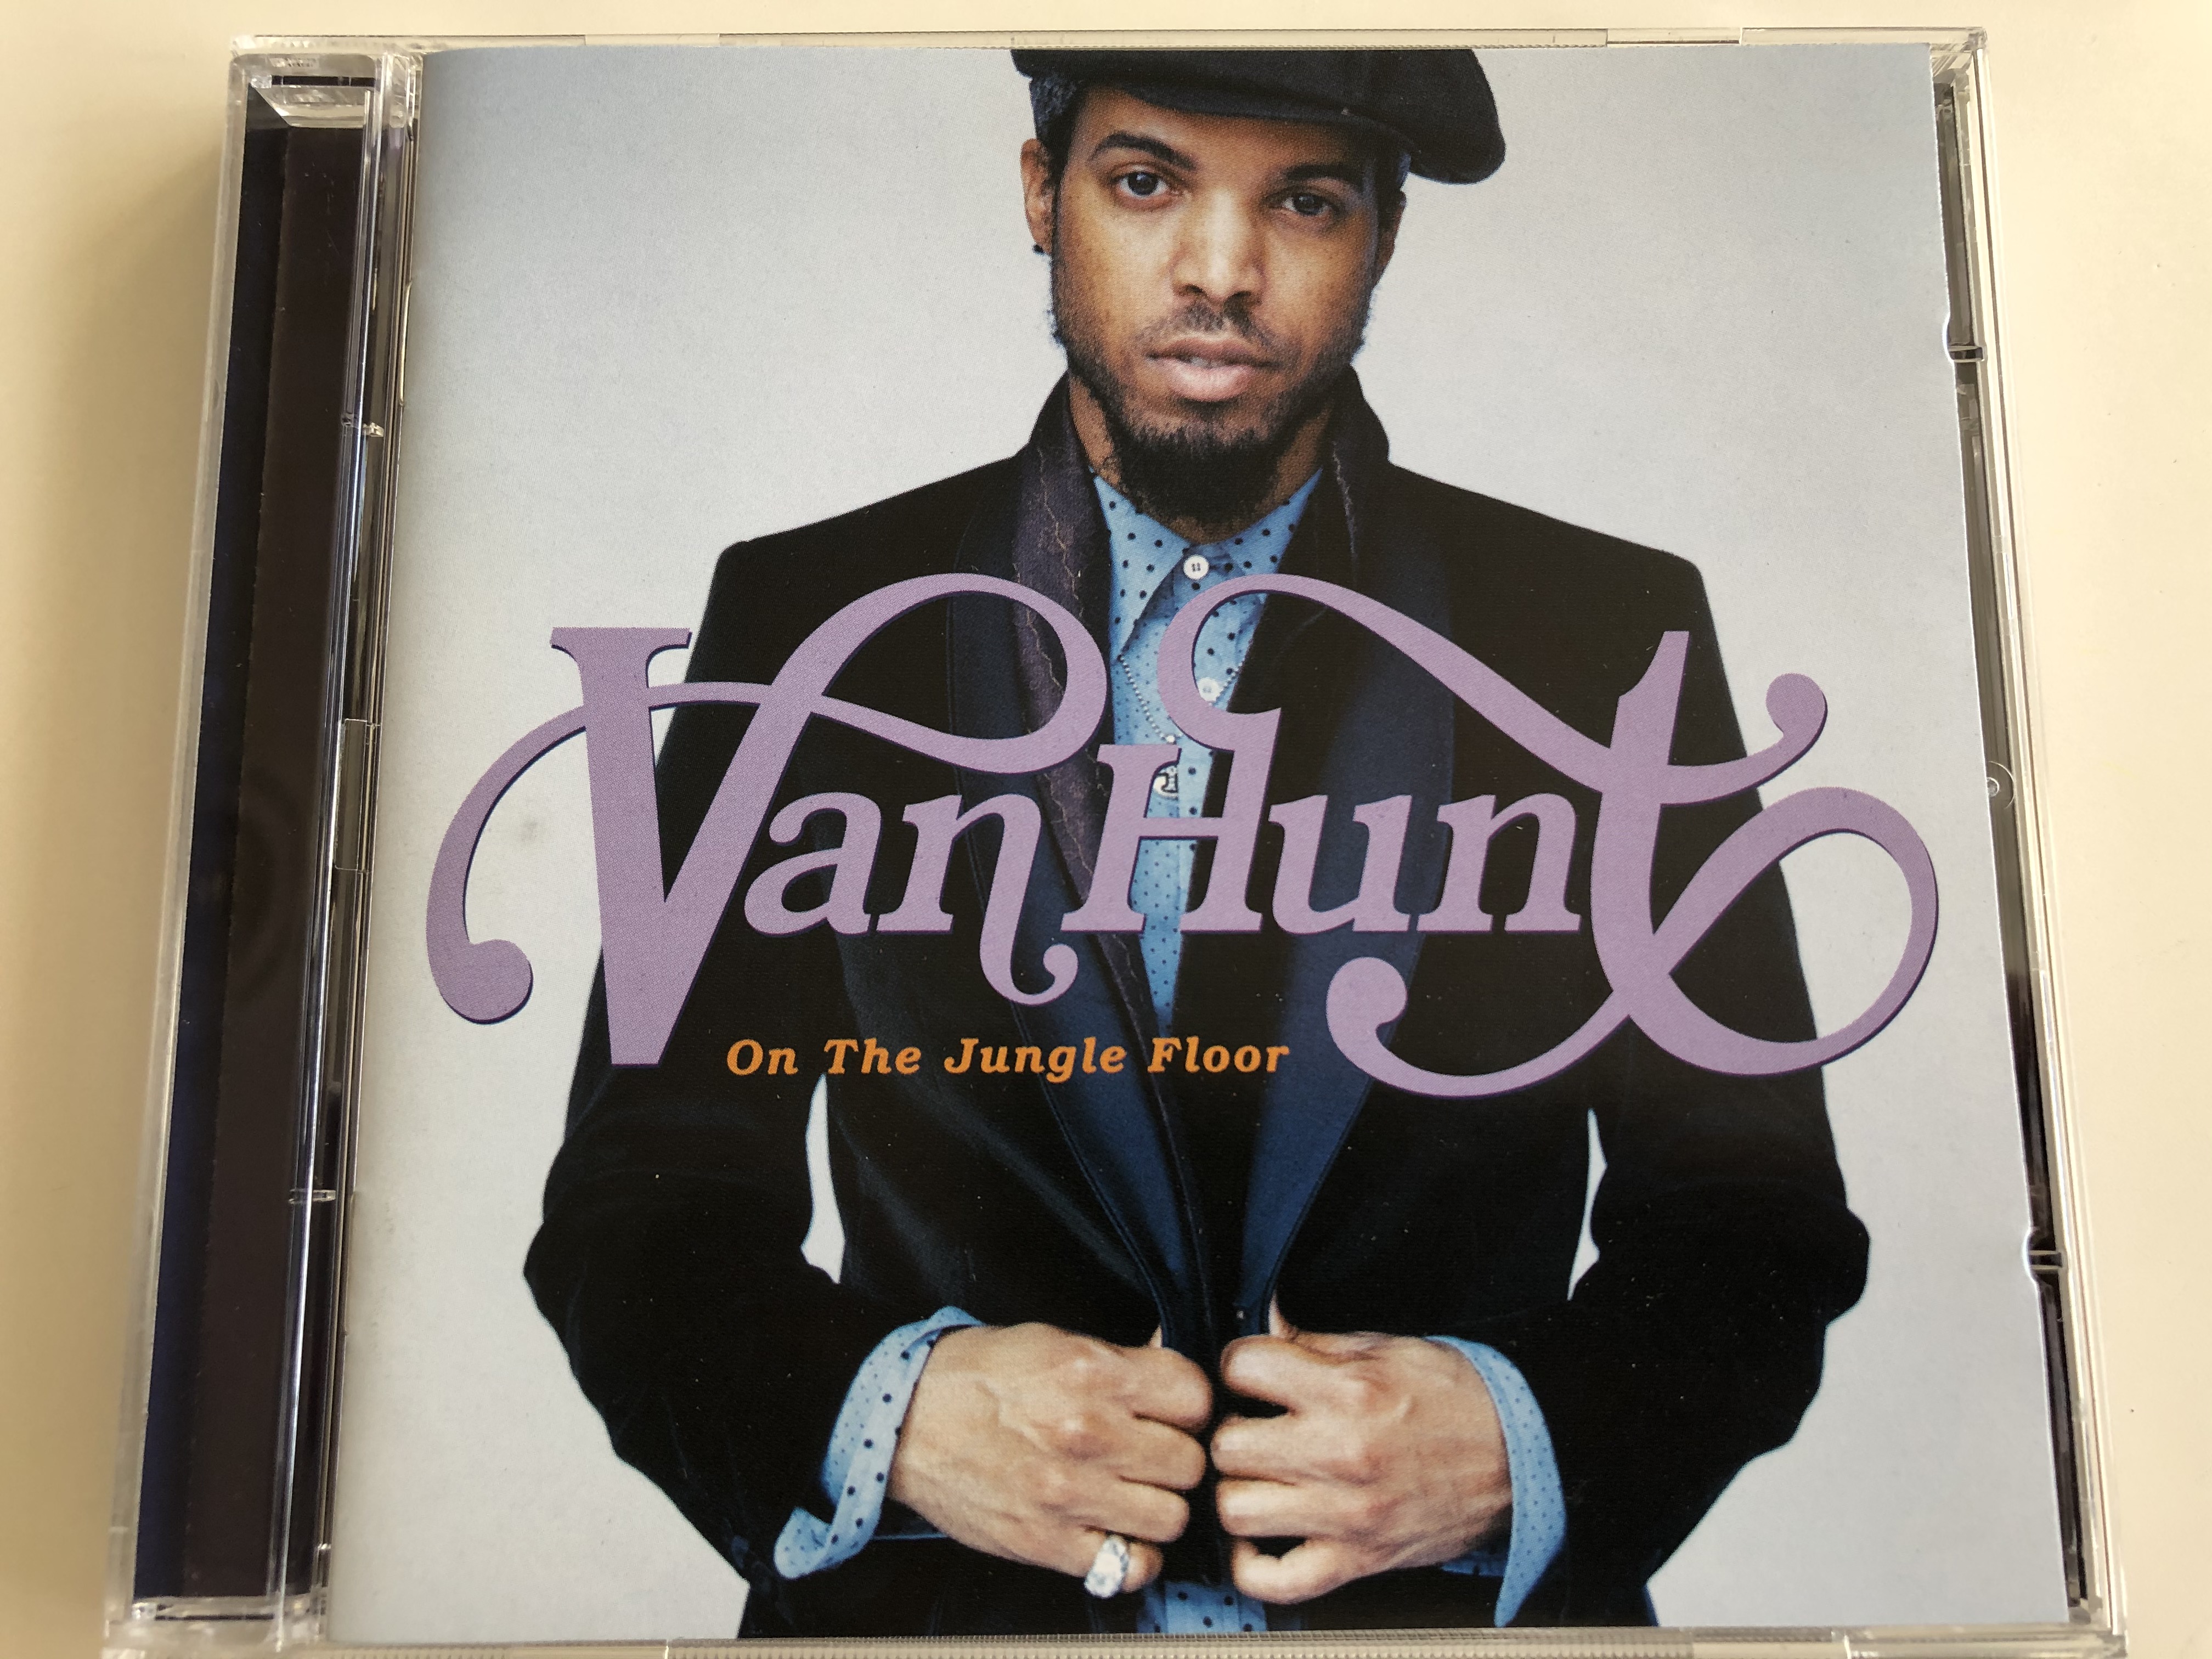 van-hunt-on-the-jungle-floor-capitol-records-audio-cd-2006-09463-59441-29-1-.jpg